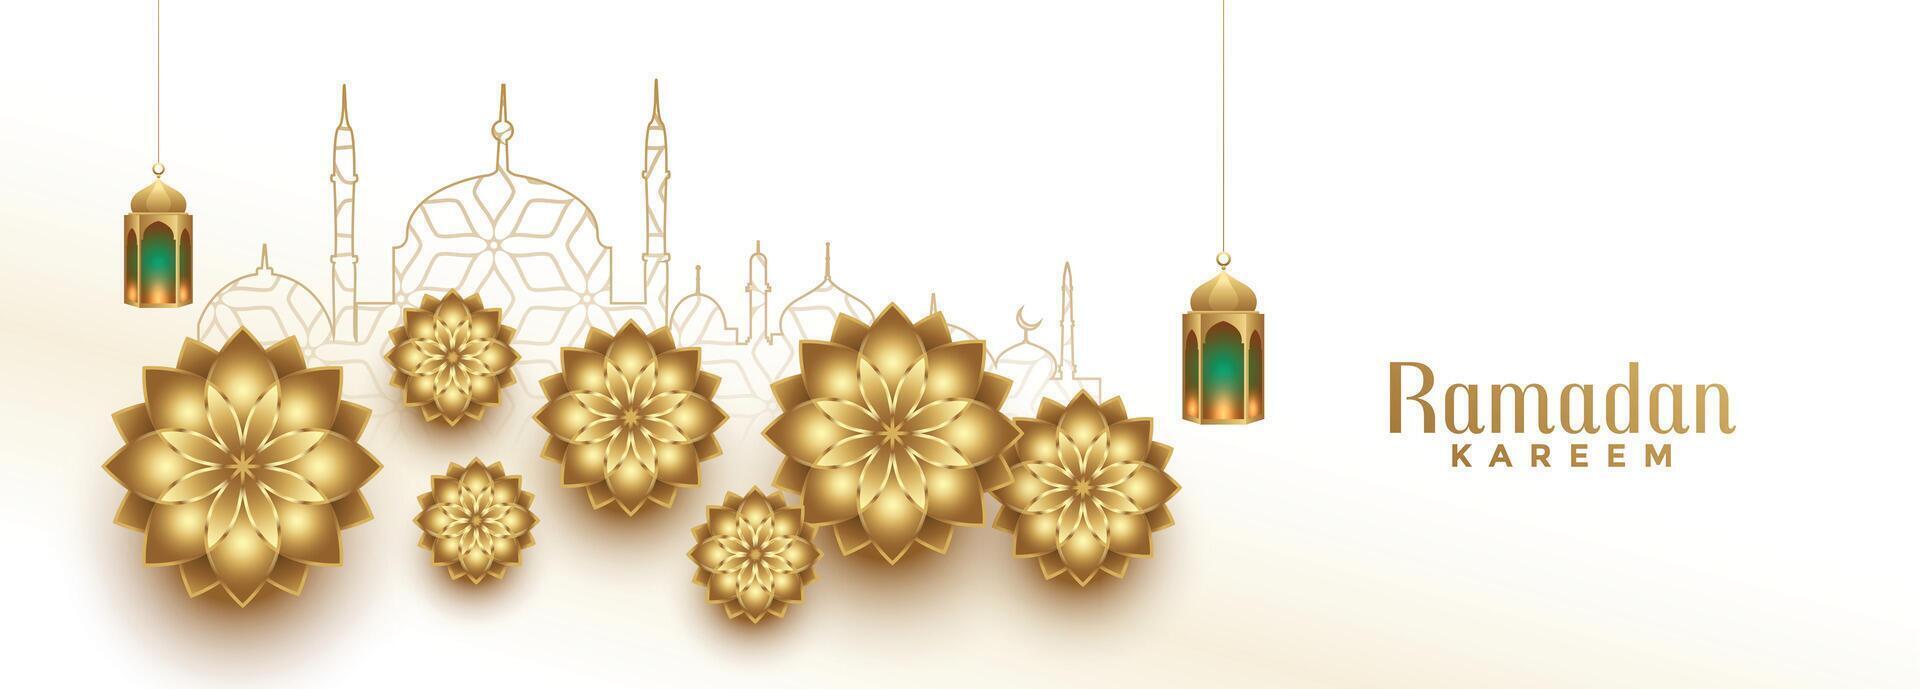 árabe Ramadã kareem islâmico eid festival bandeira Projeto vetor